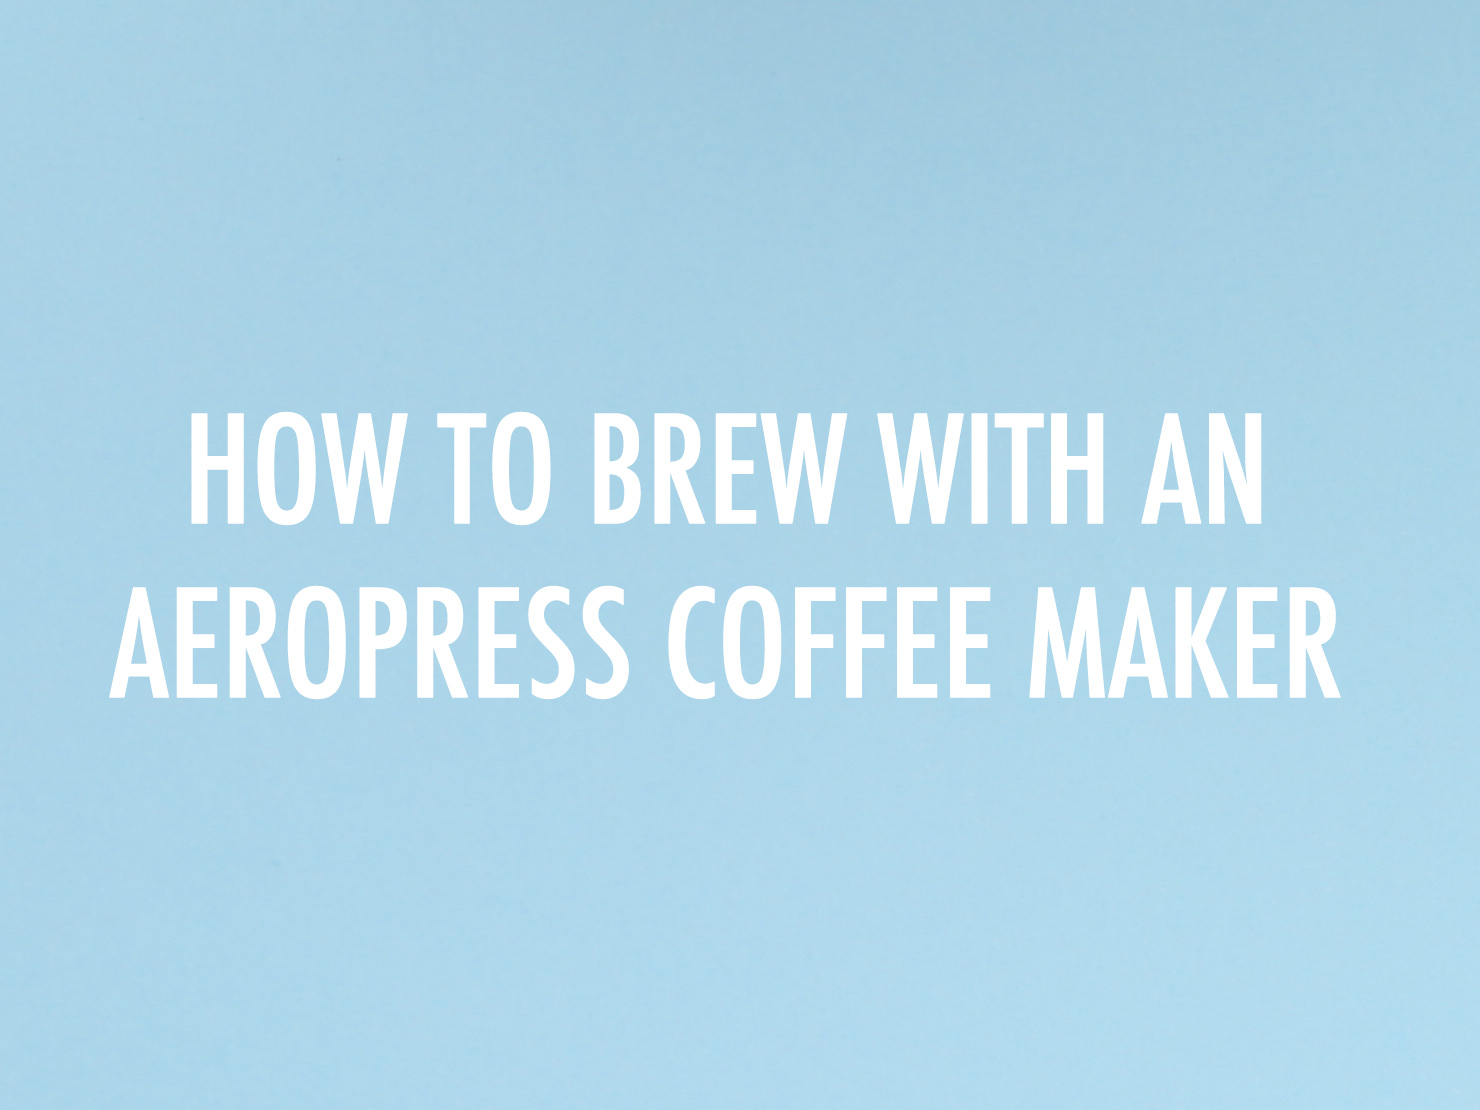 Brewing 1 LITER with AeroPress XL: Will it work? 